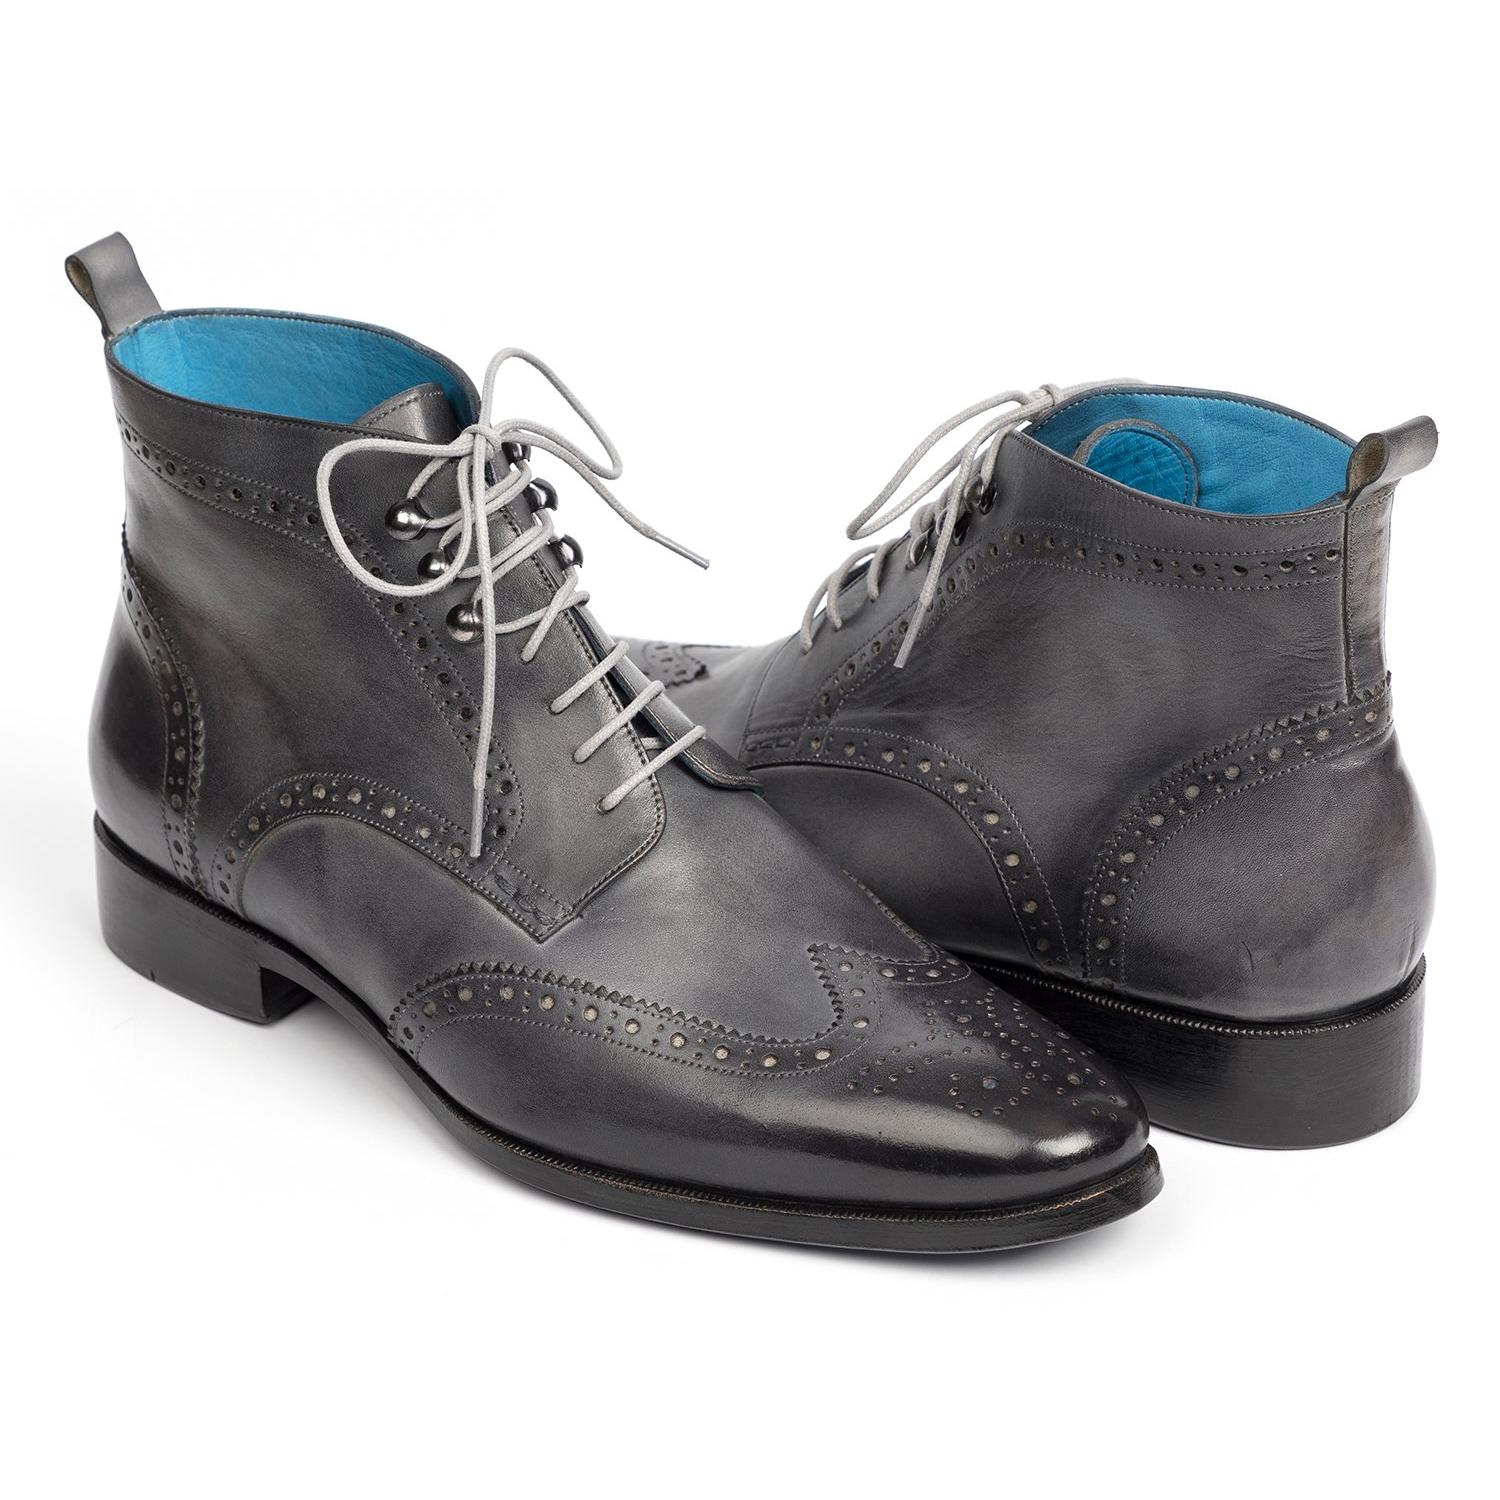 grey wingtip shoes